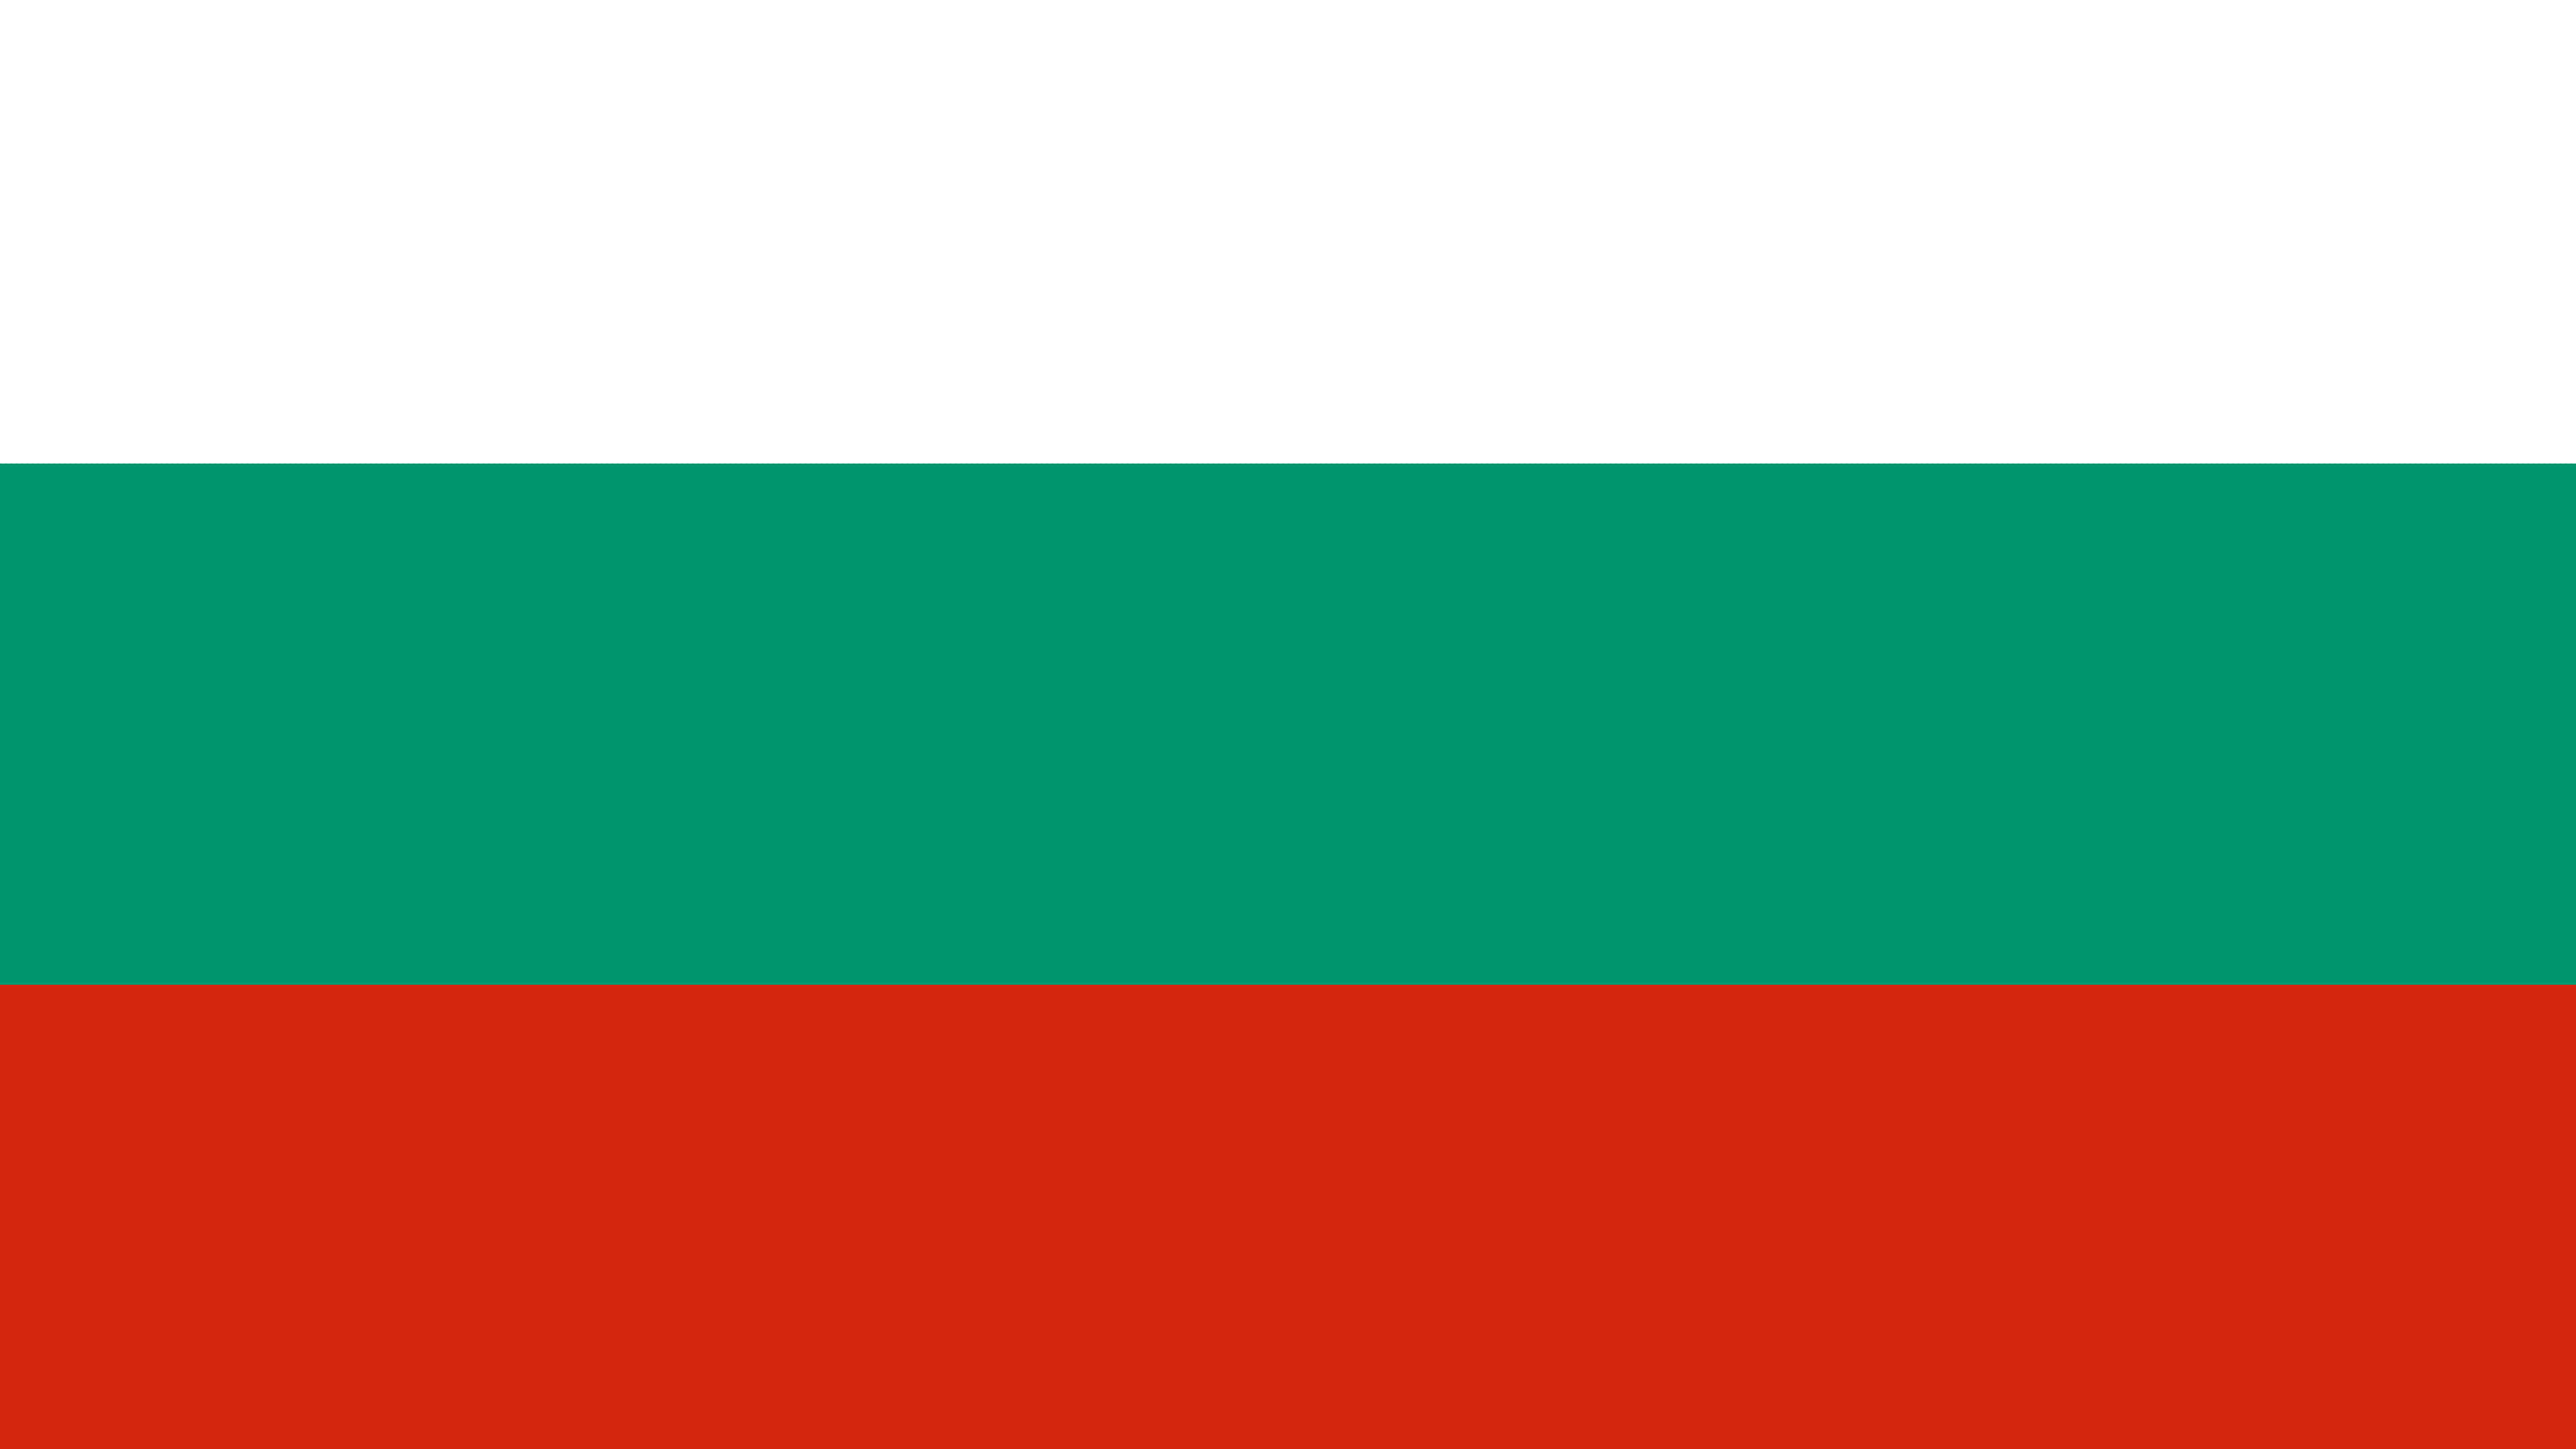 Bulgaria Flag UHD 4k Wallpaper